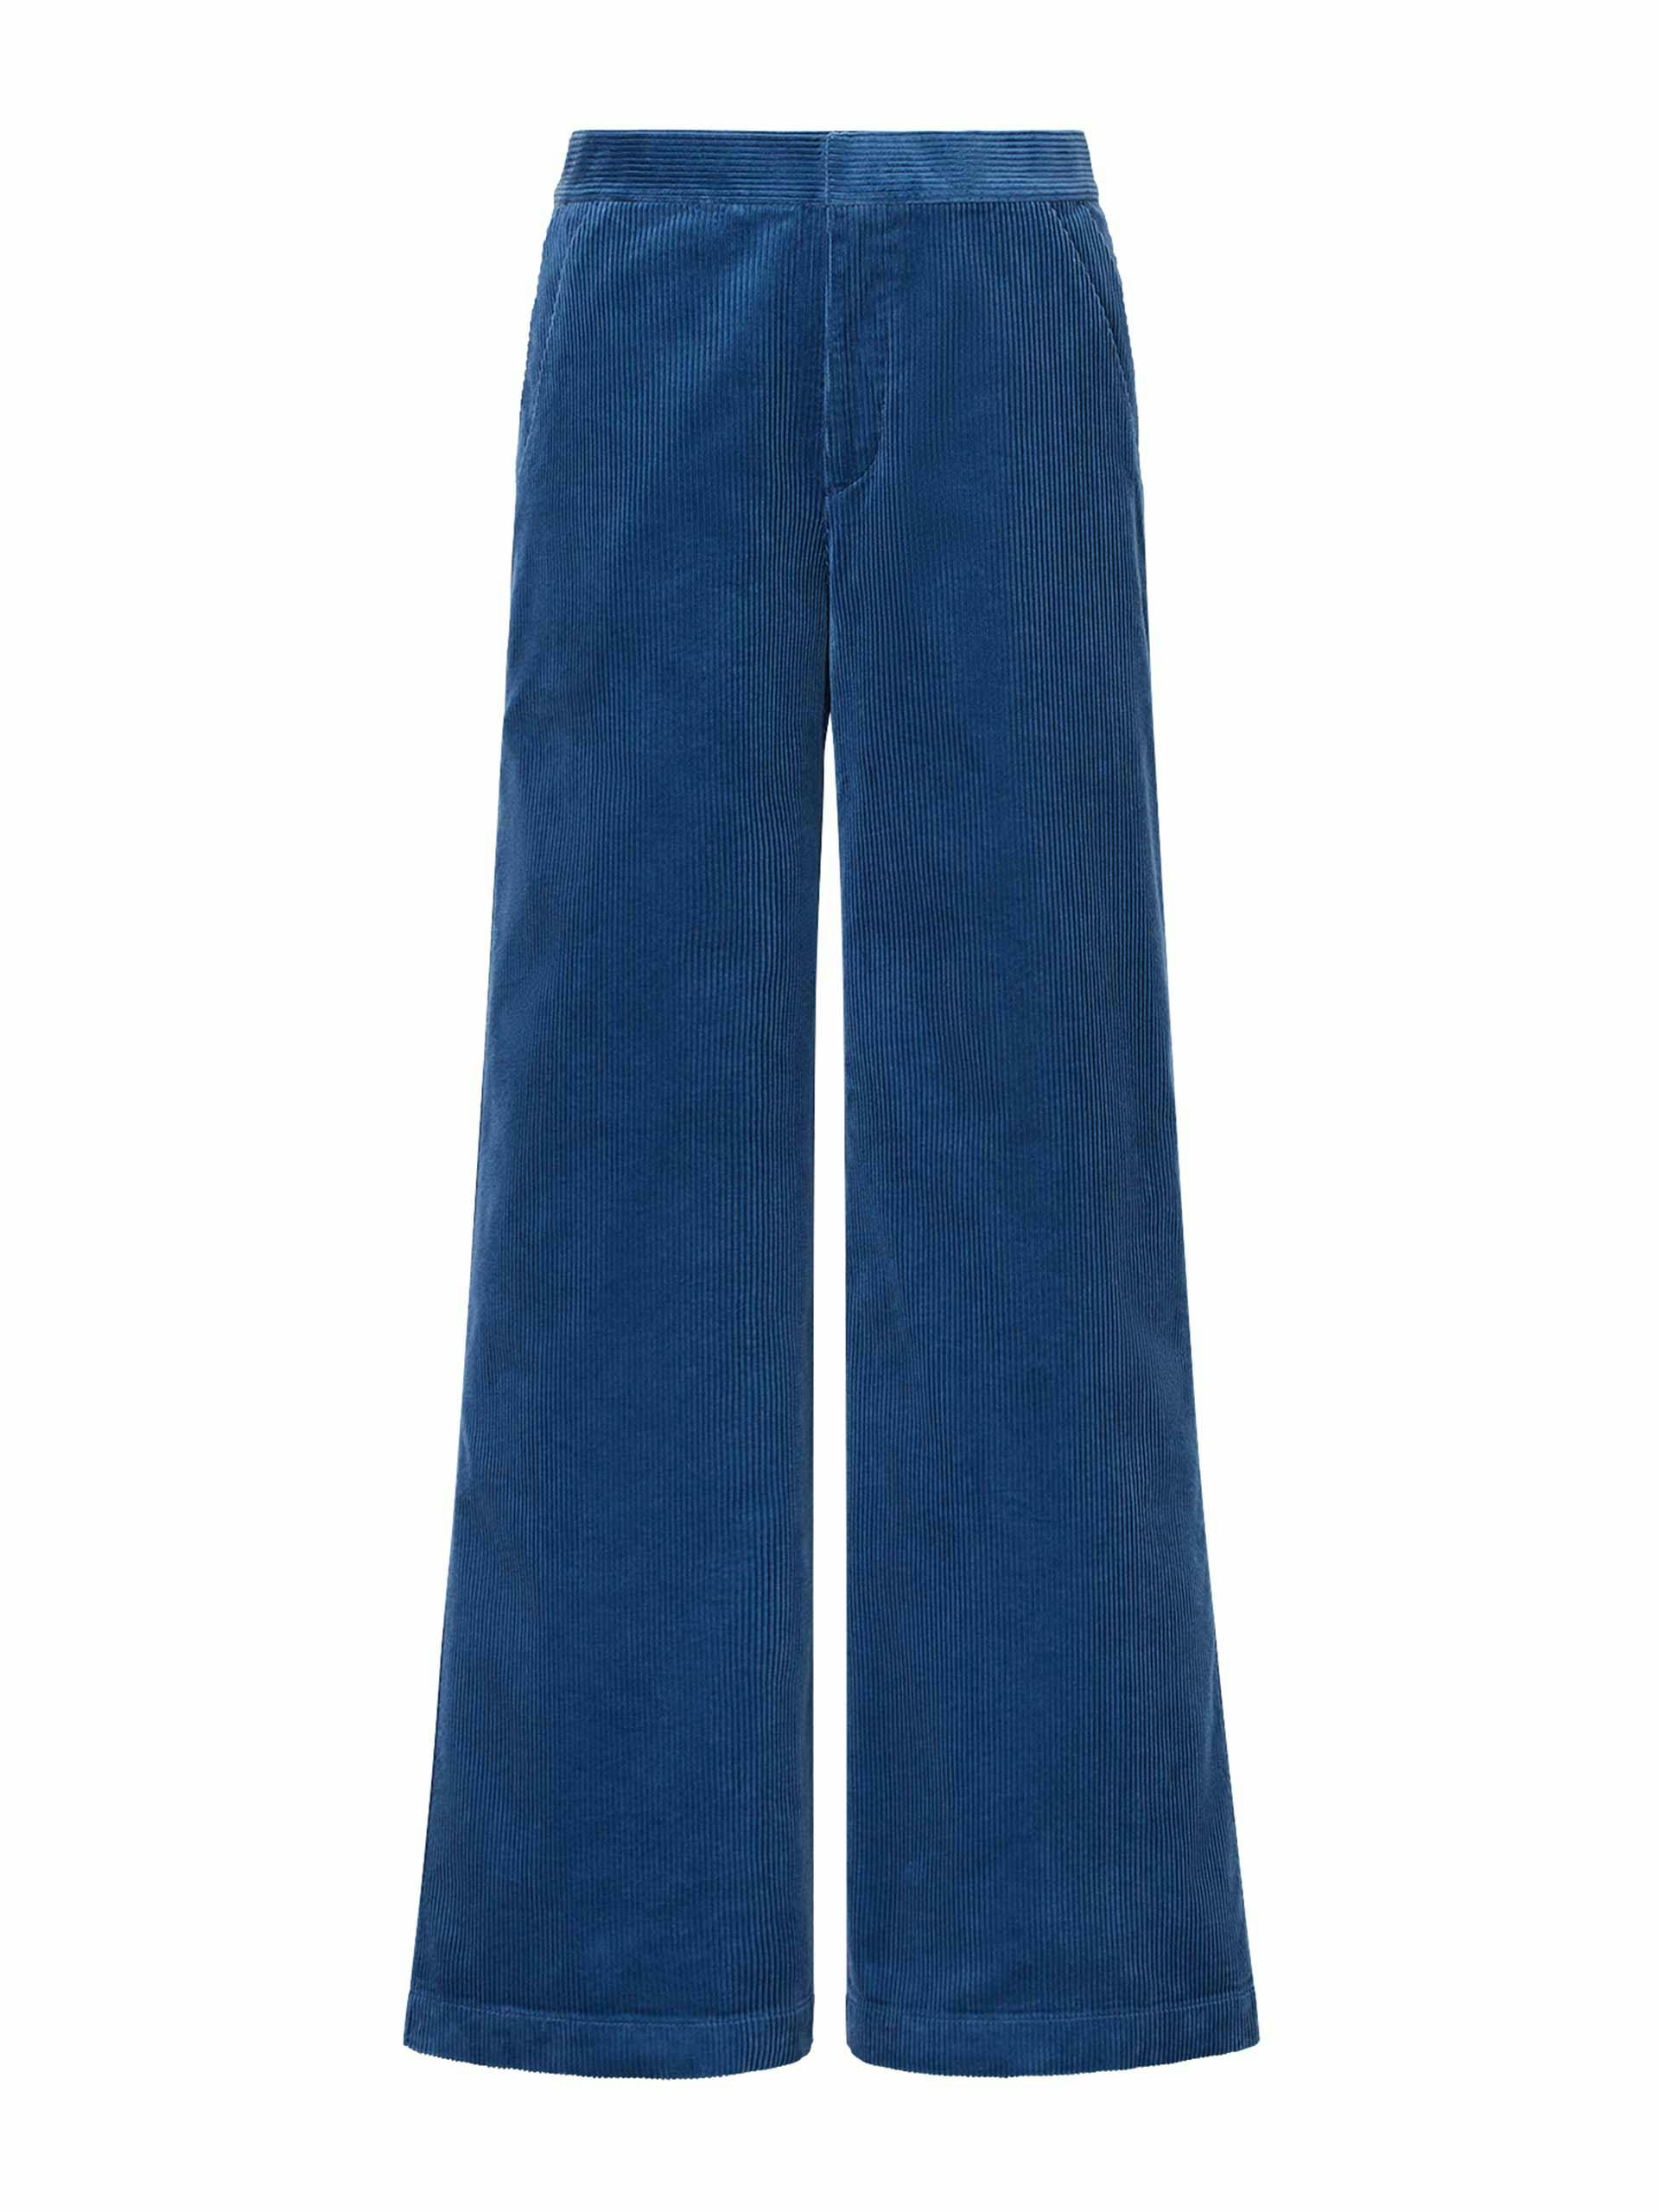 Corduroy blue wide leg trousers